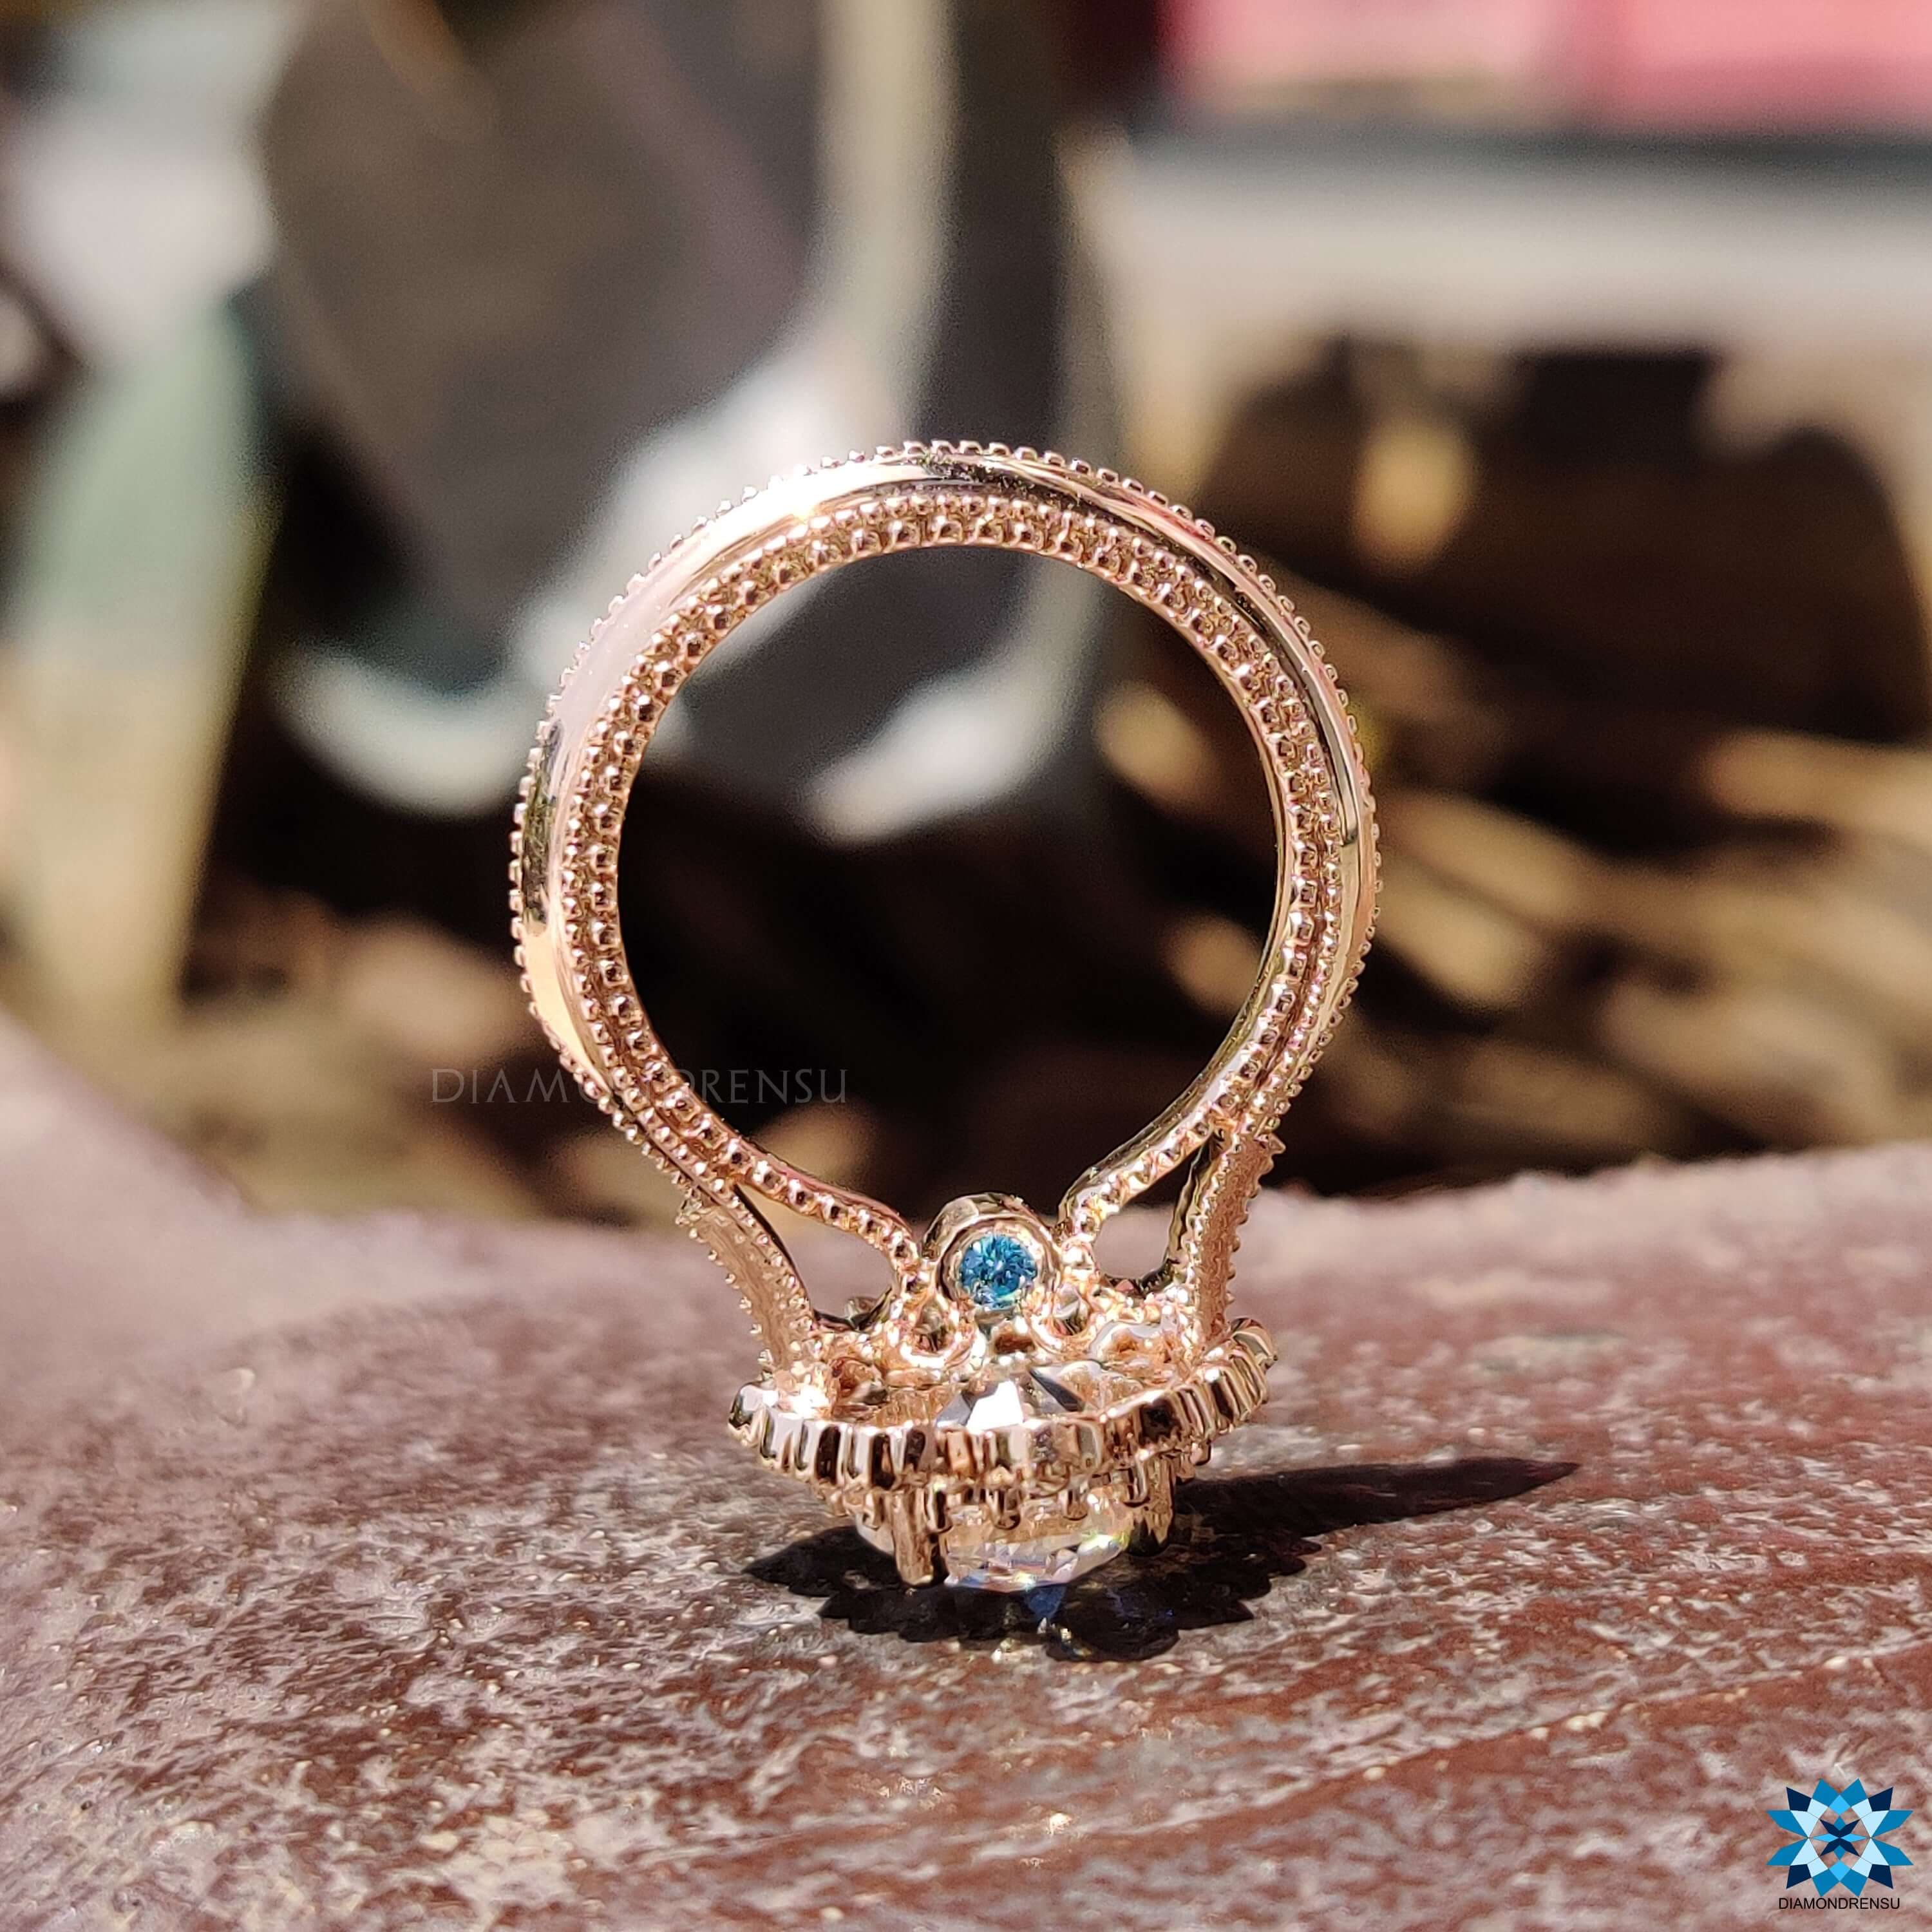 antique vintage ring - diamondrensu